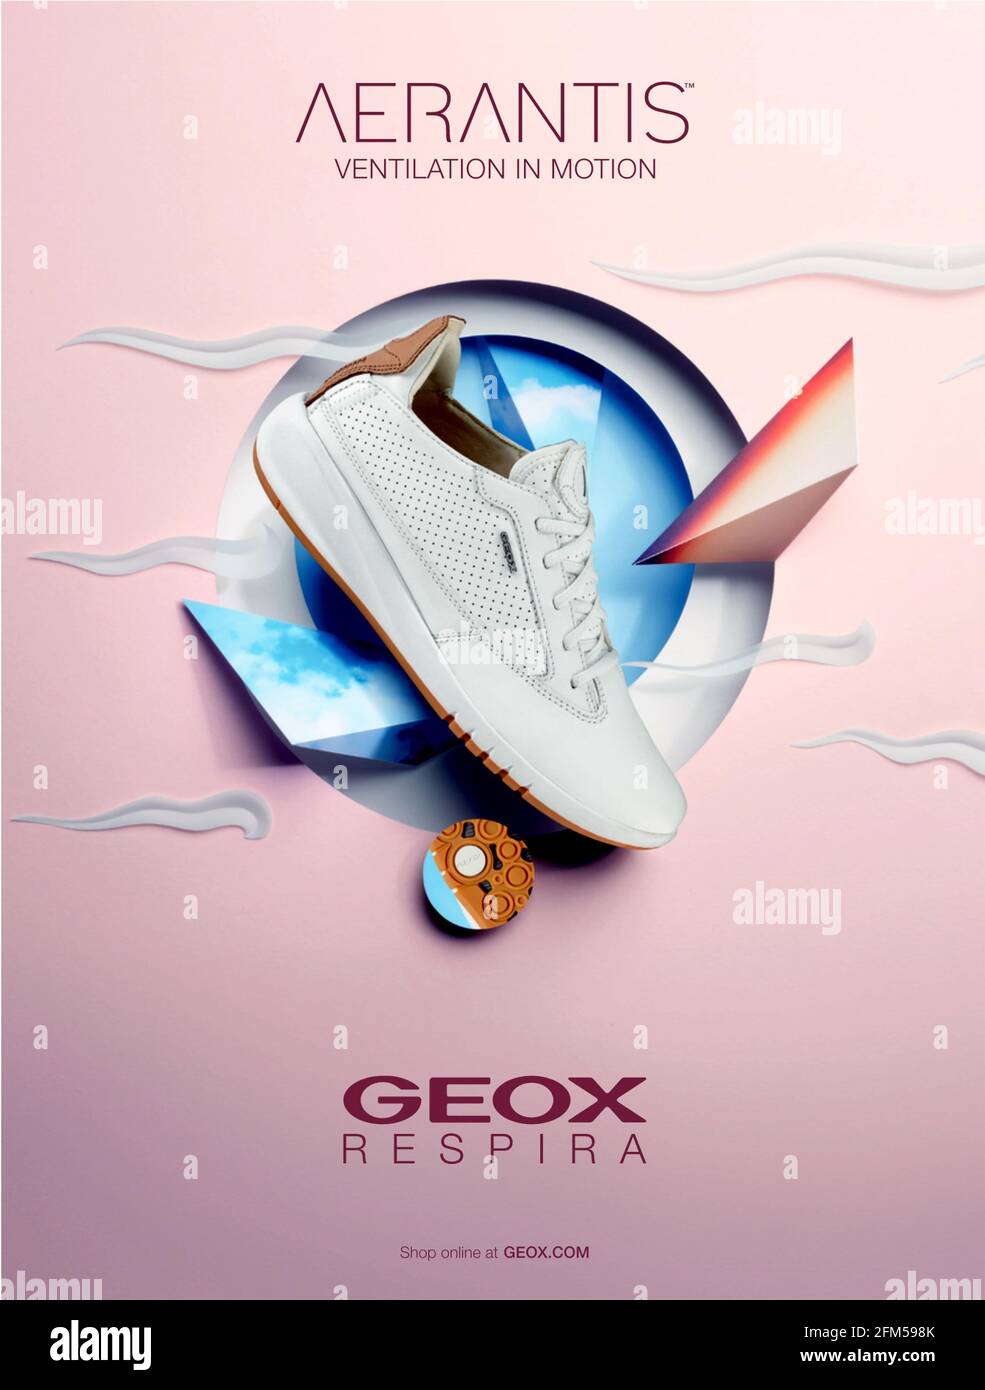 2020s UK Geox Magazine Advert Stock Photo